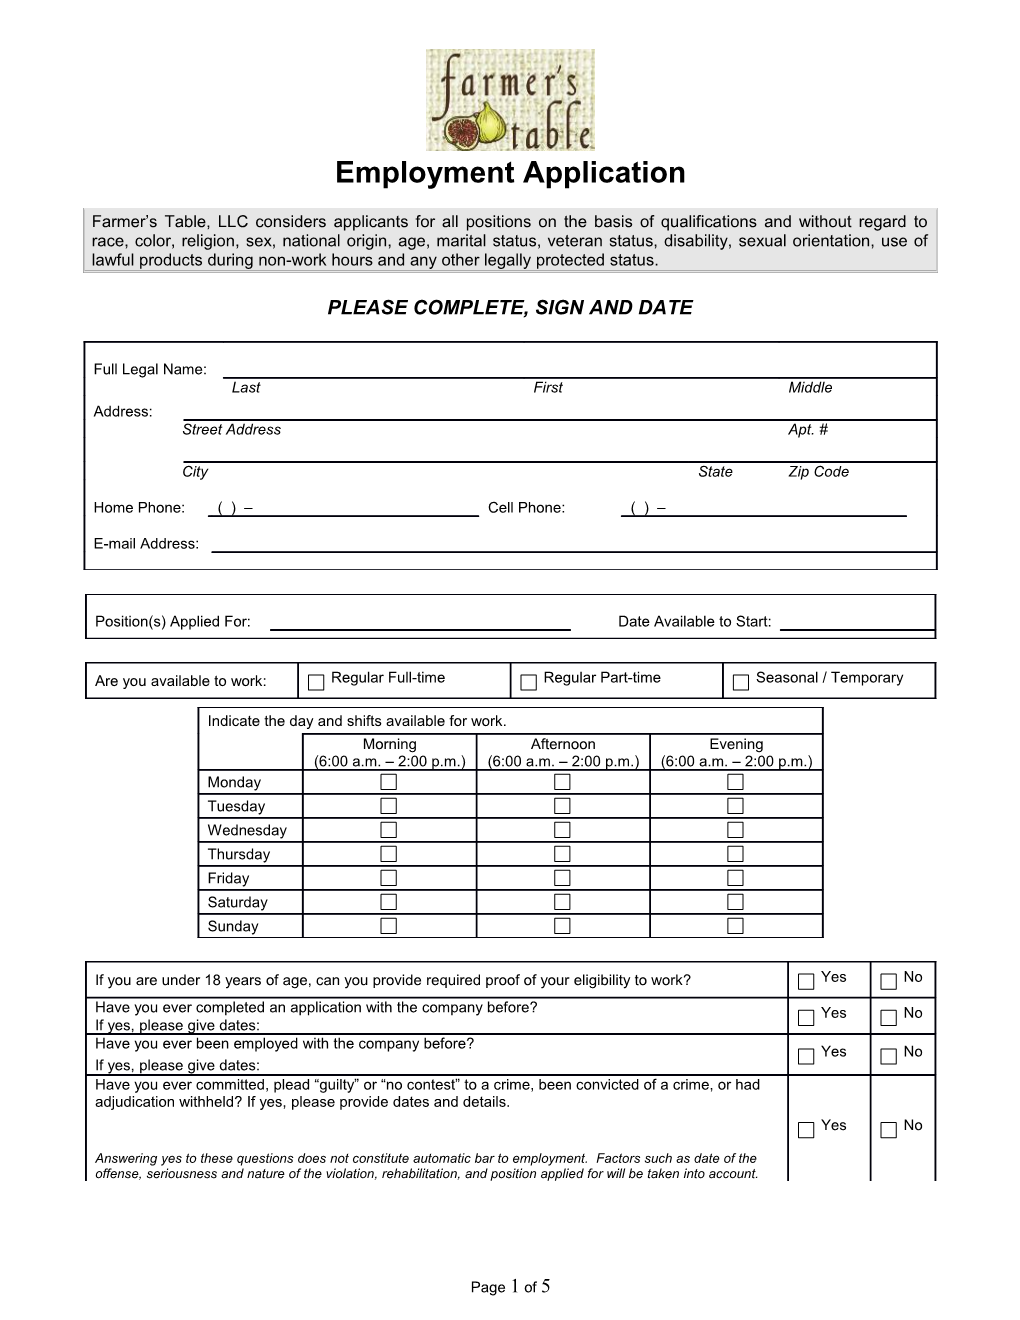 Employment Application s9